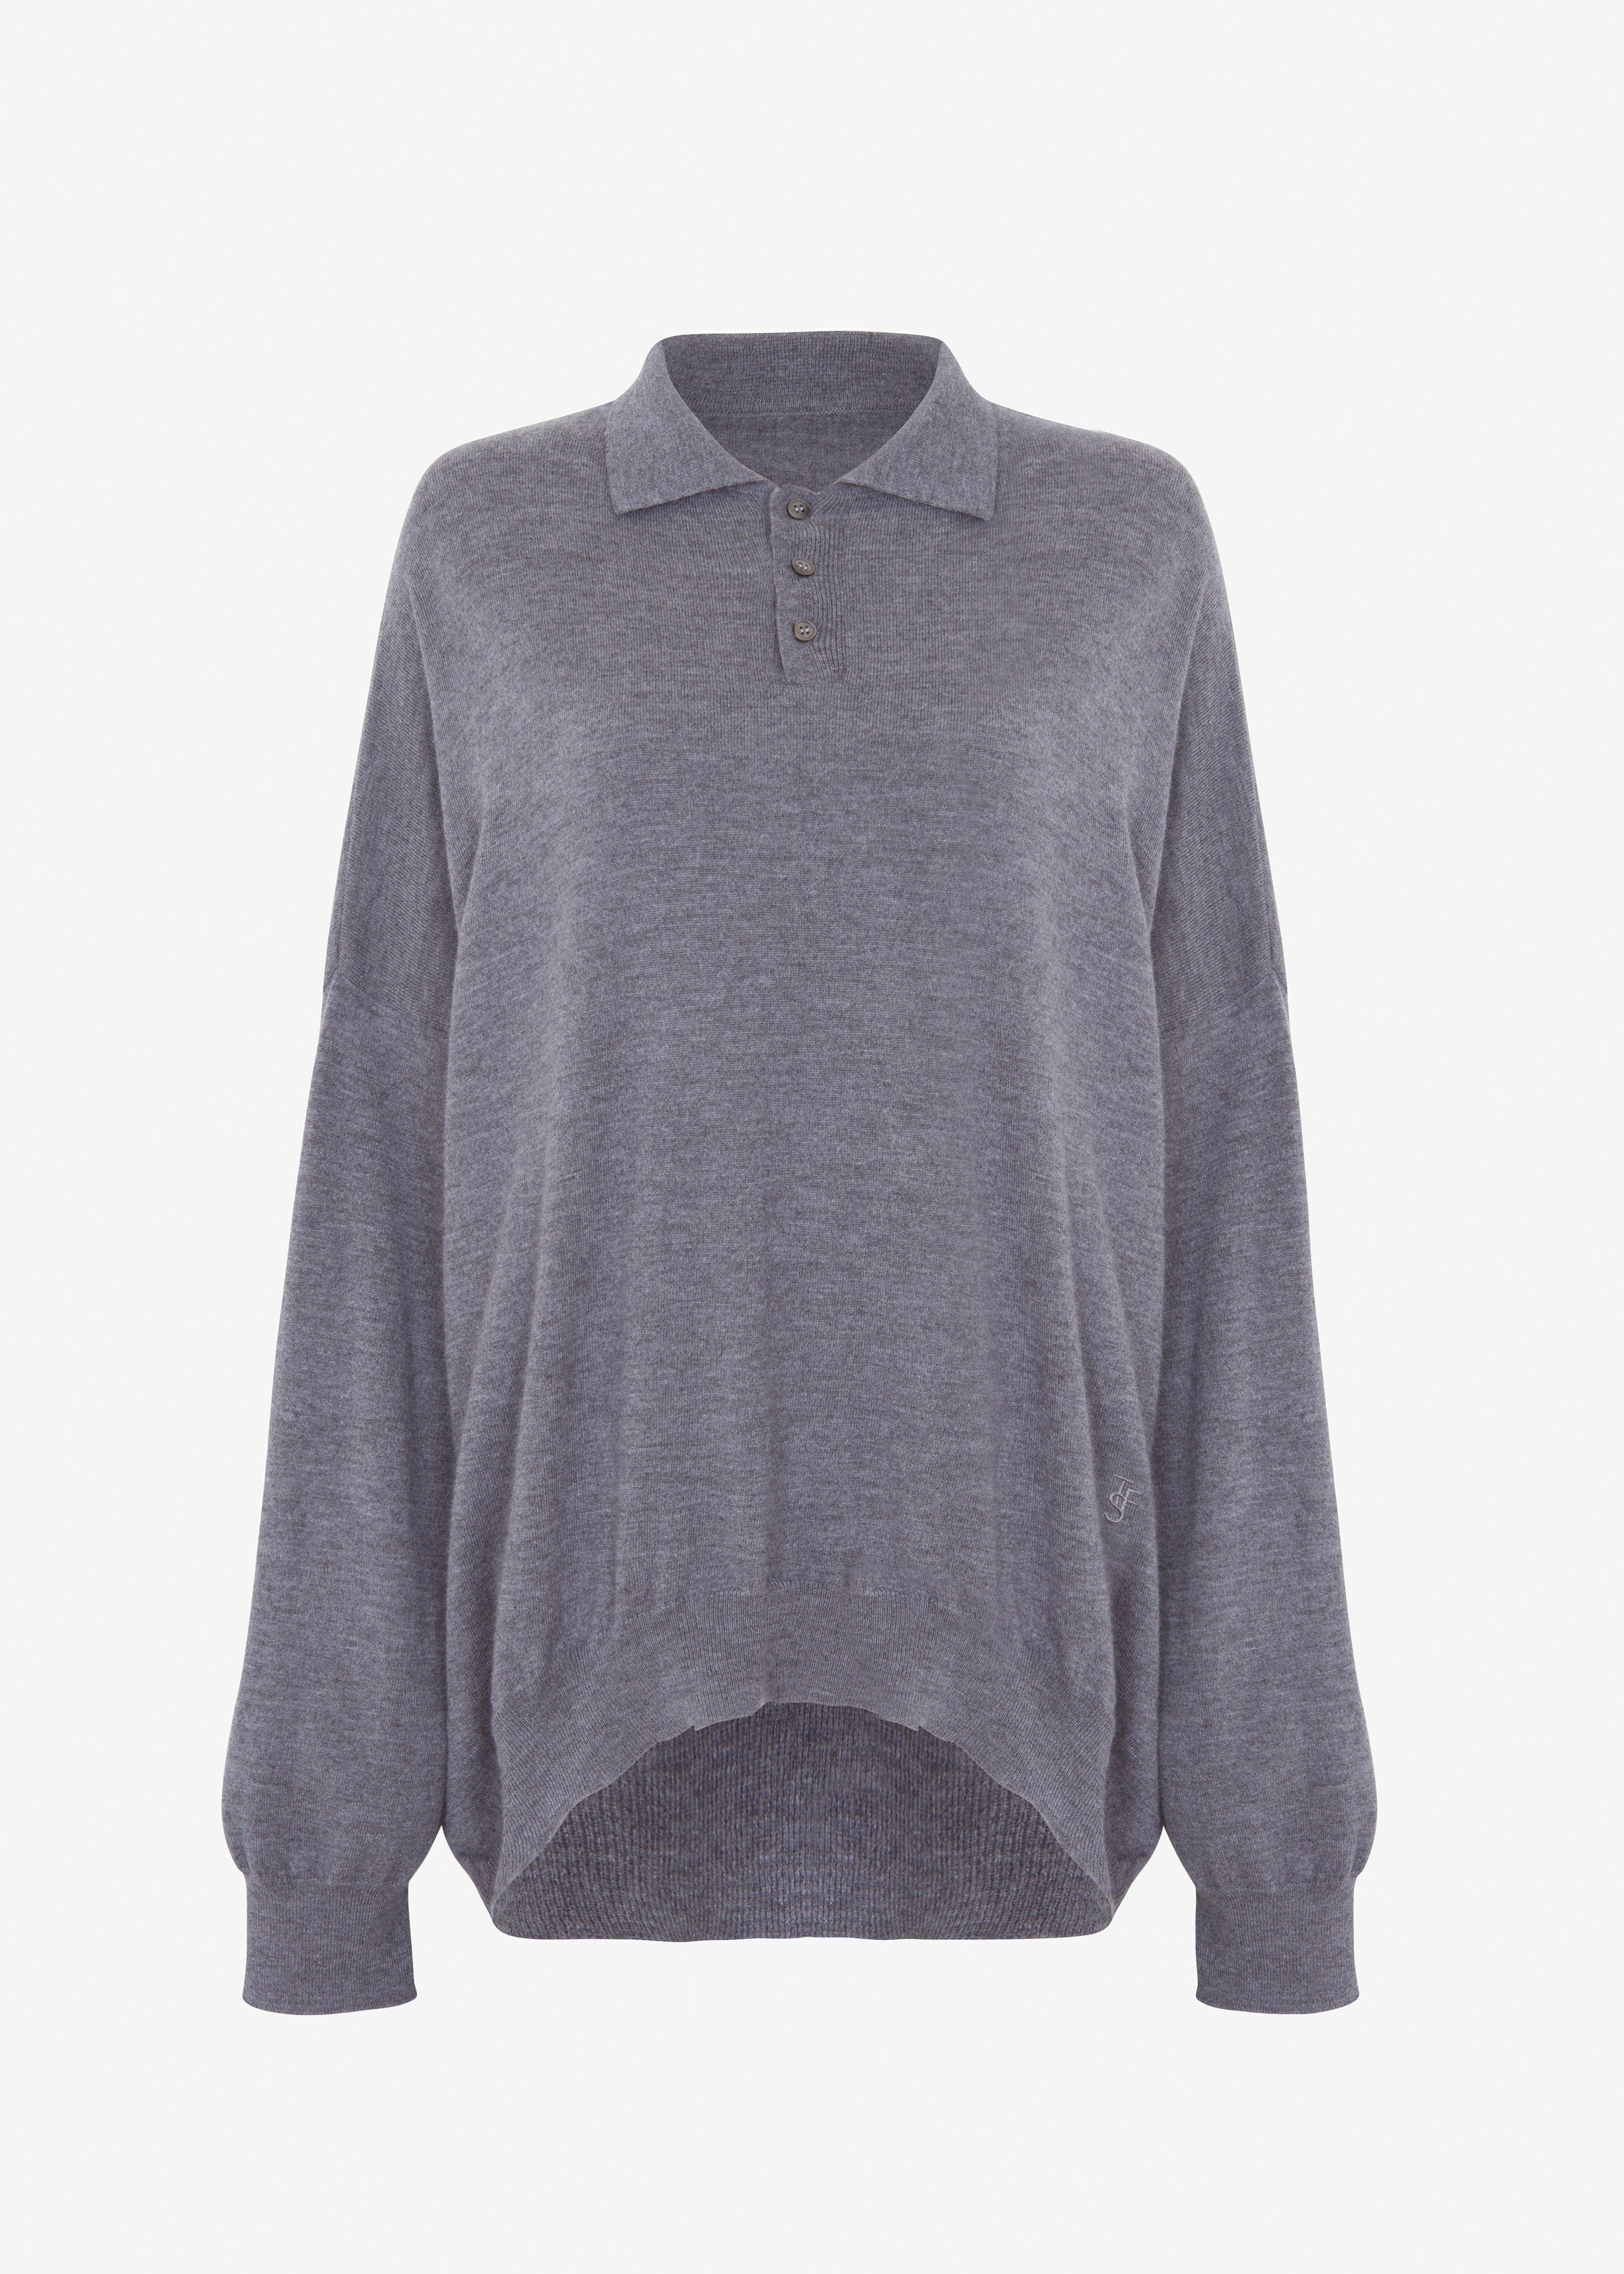 Meriel Polo Sweater - Grey - 14